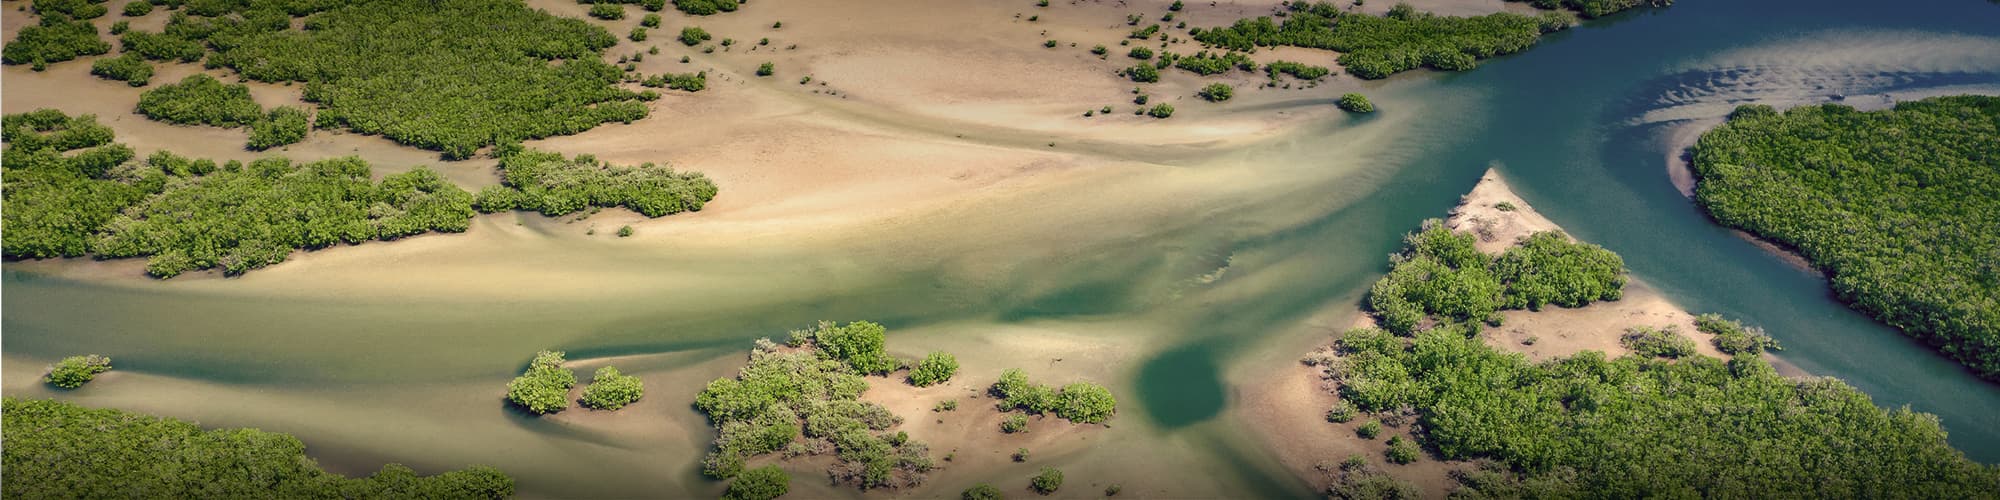 Trek au Sénégal : circuit, randonnée et voyage  © Djekker / Adobe Stock